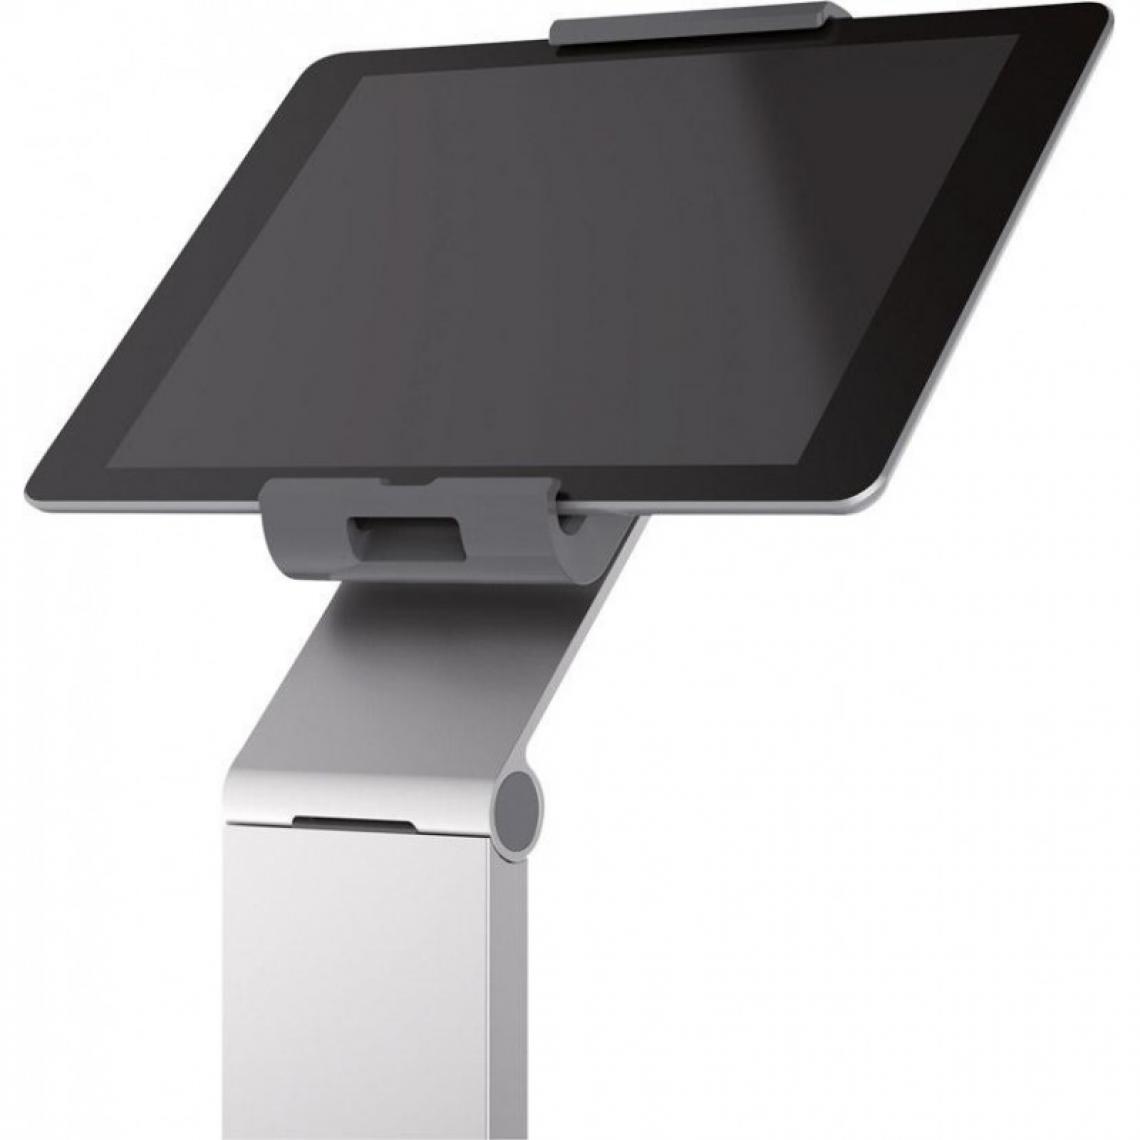 marque generique - Support tablette sol - Visserie